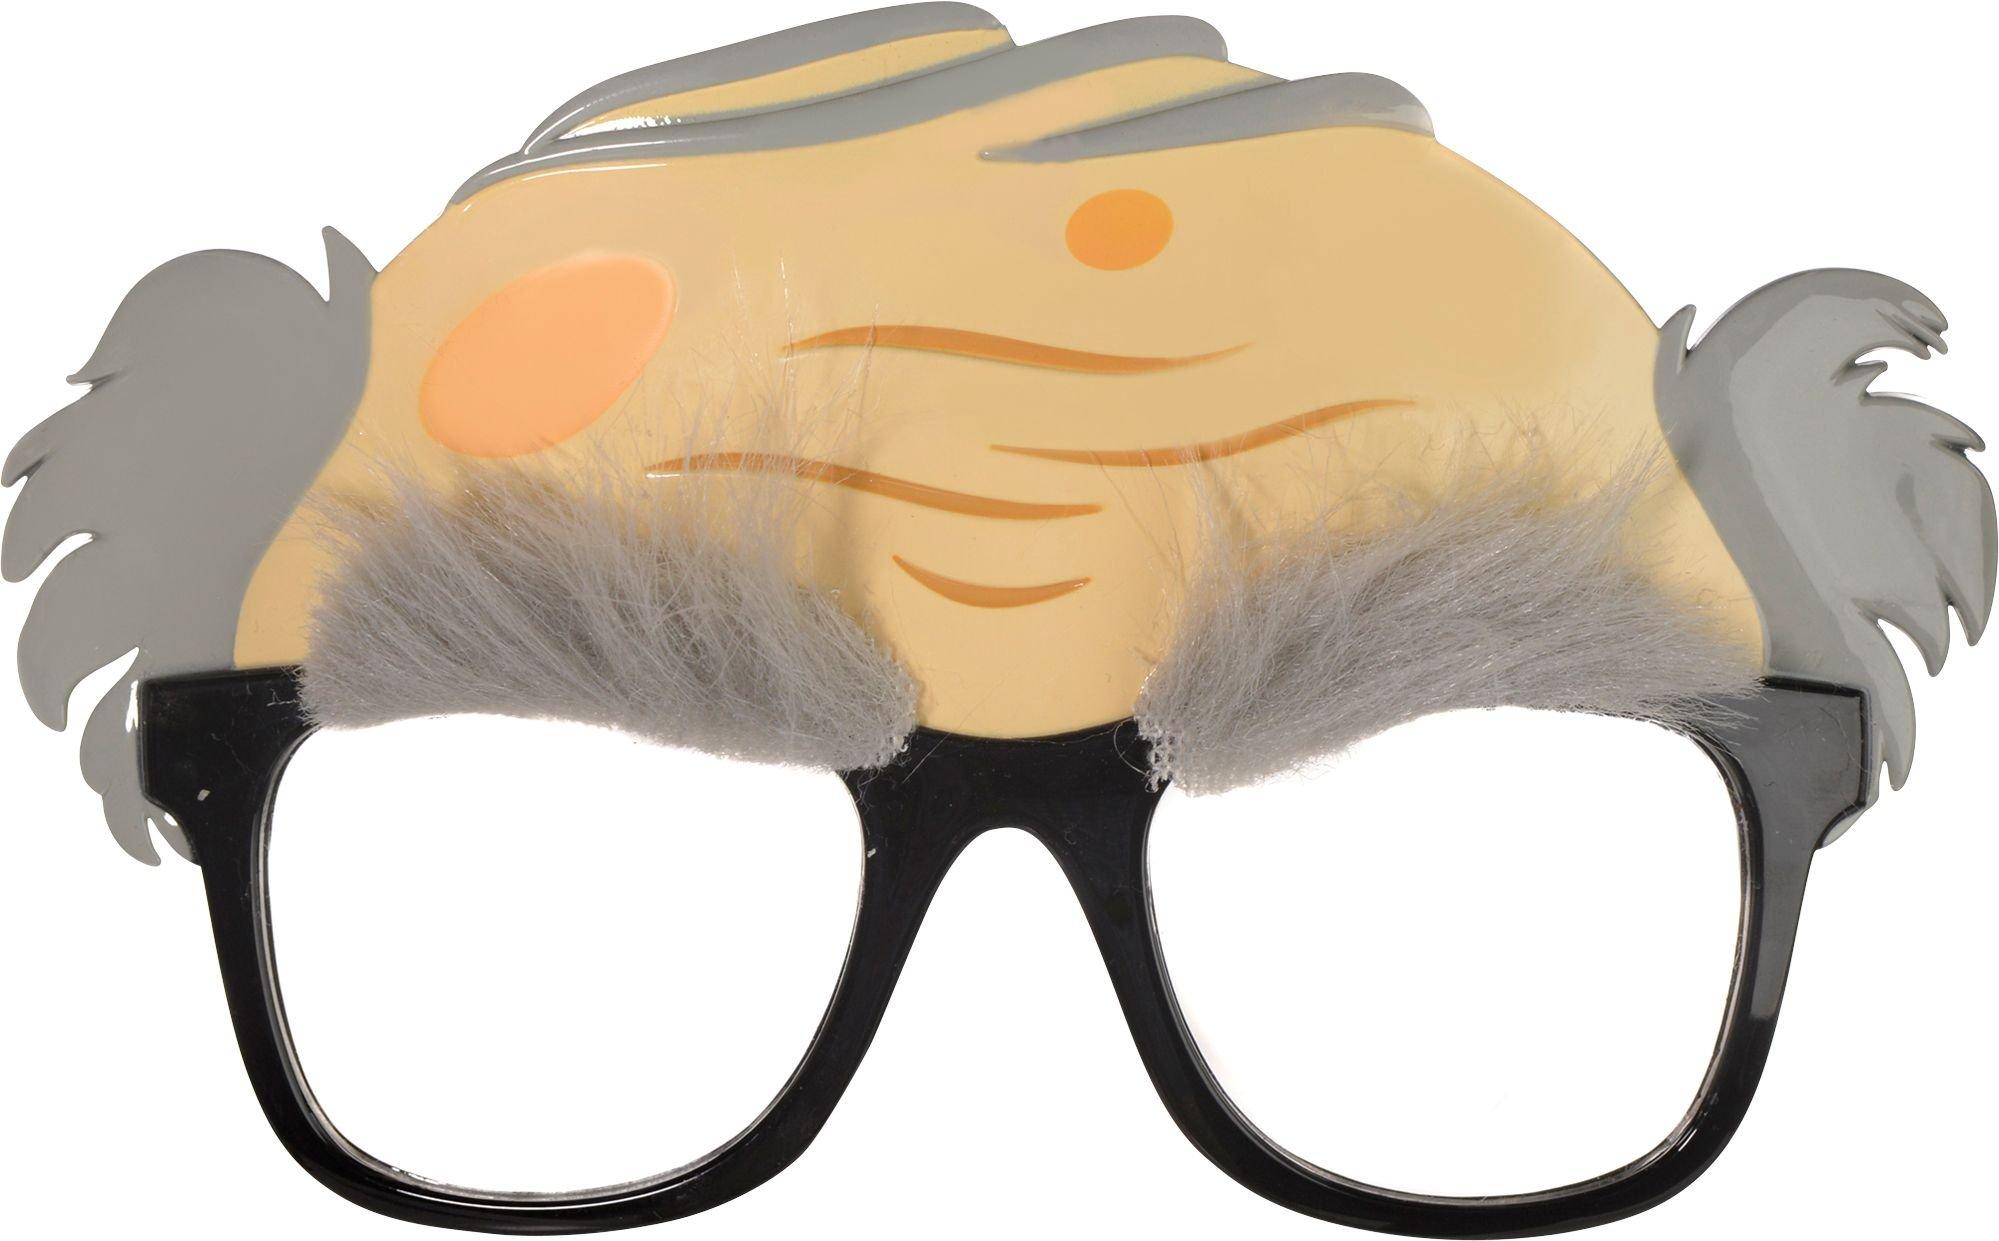 Old Man Glasses